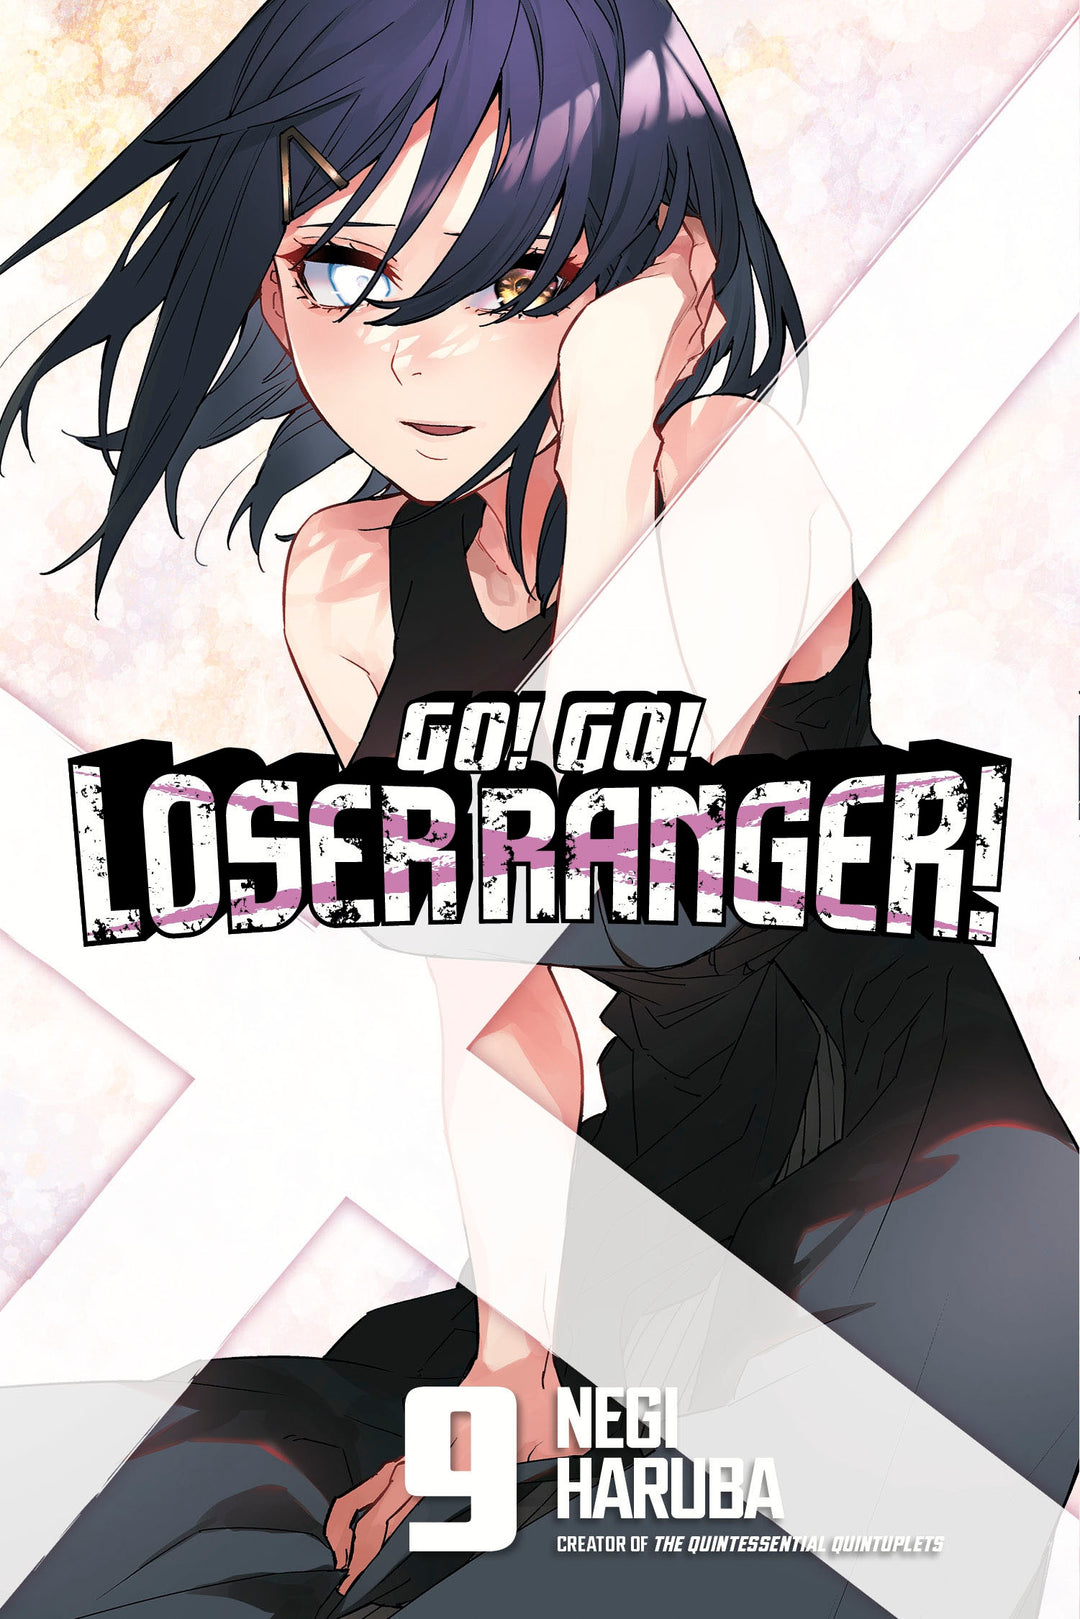 Go! Go! Loser Ranger!, Vol. 09